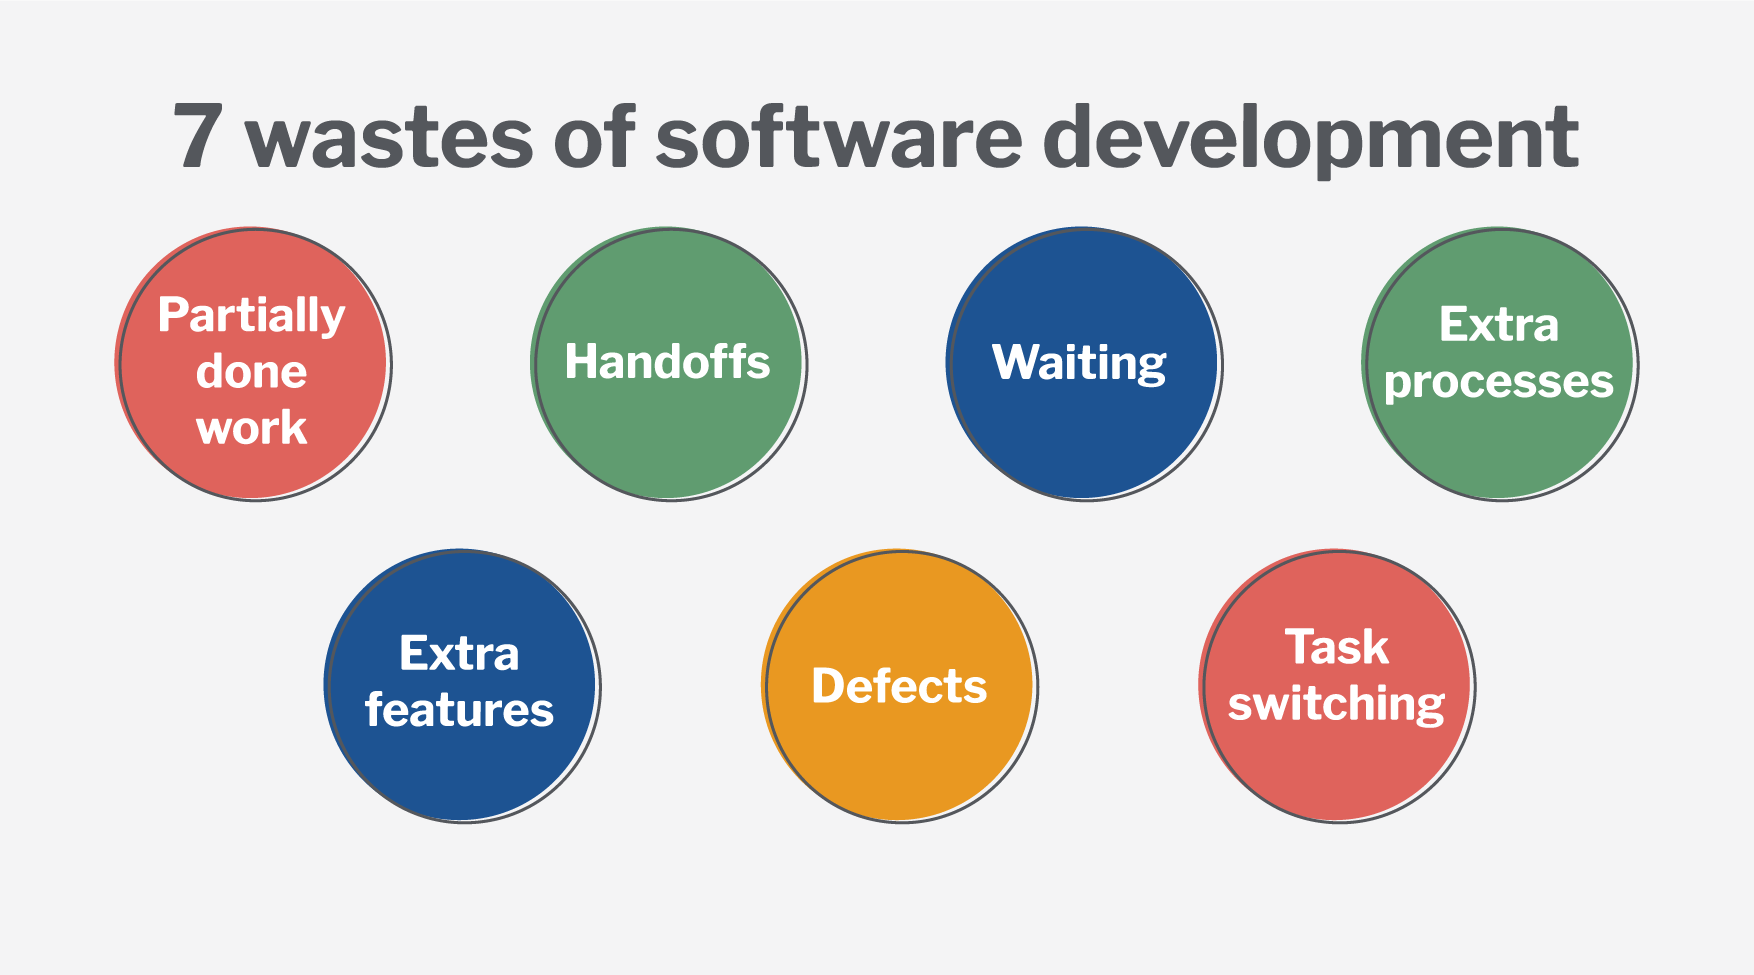 Seven wastes of software development.